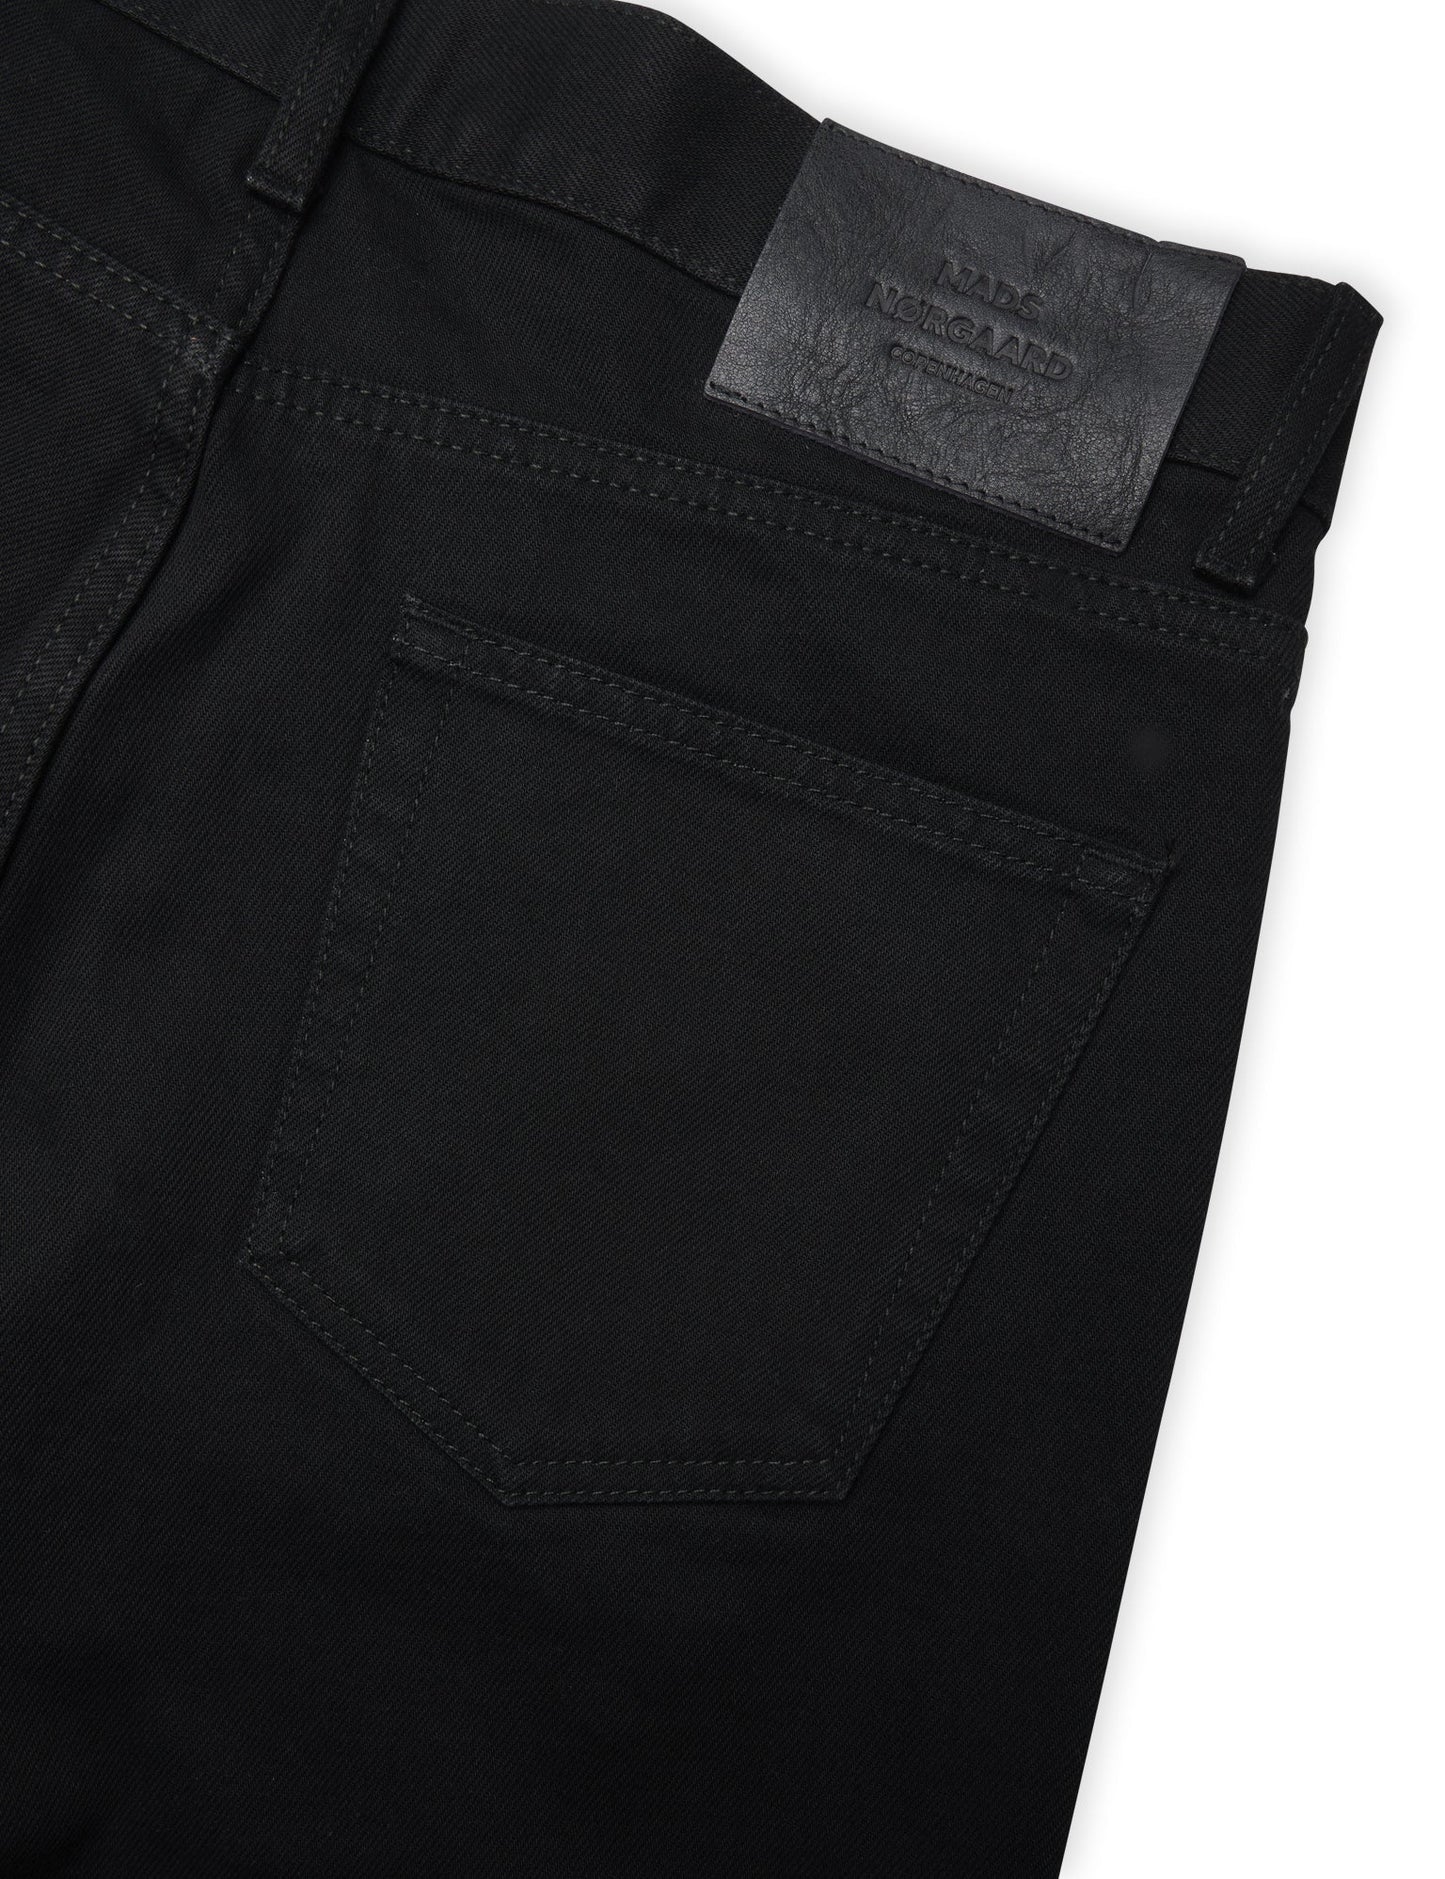 Organic Black Jas Jeans, Black Rinse